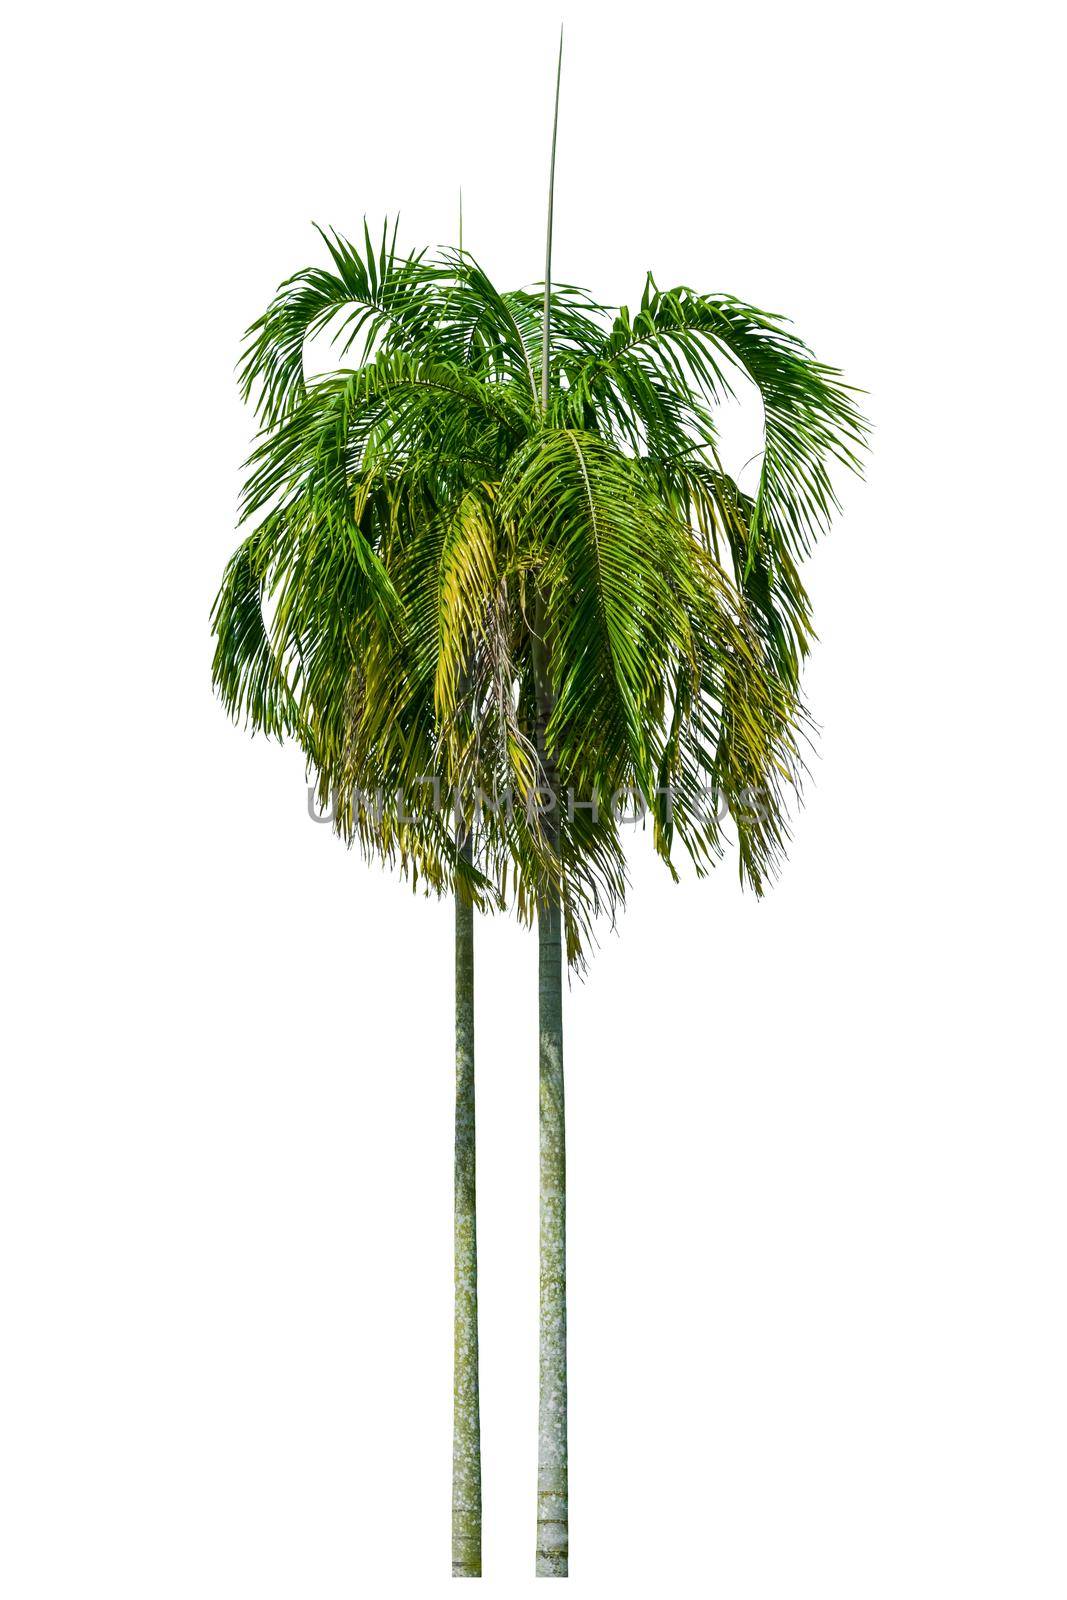 Palm tree Ornamental plants  beautiful on white background by pramot